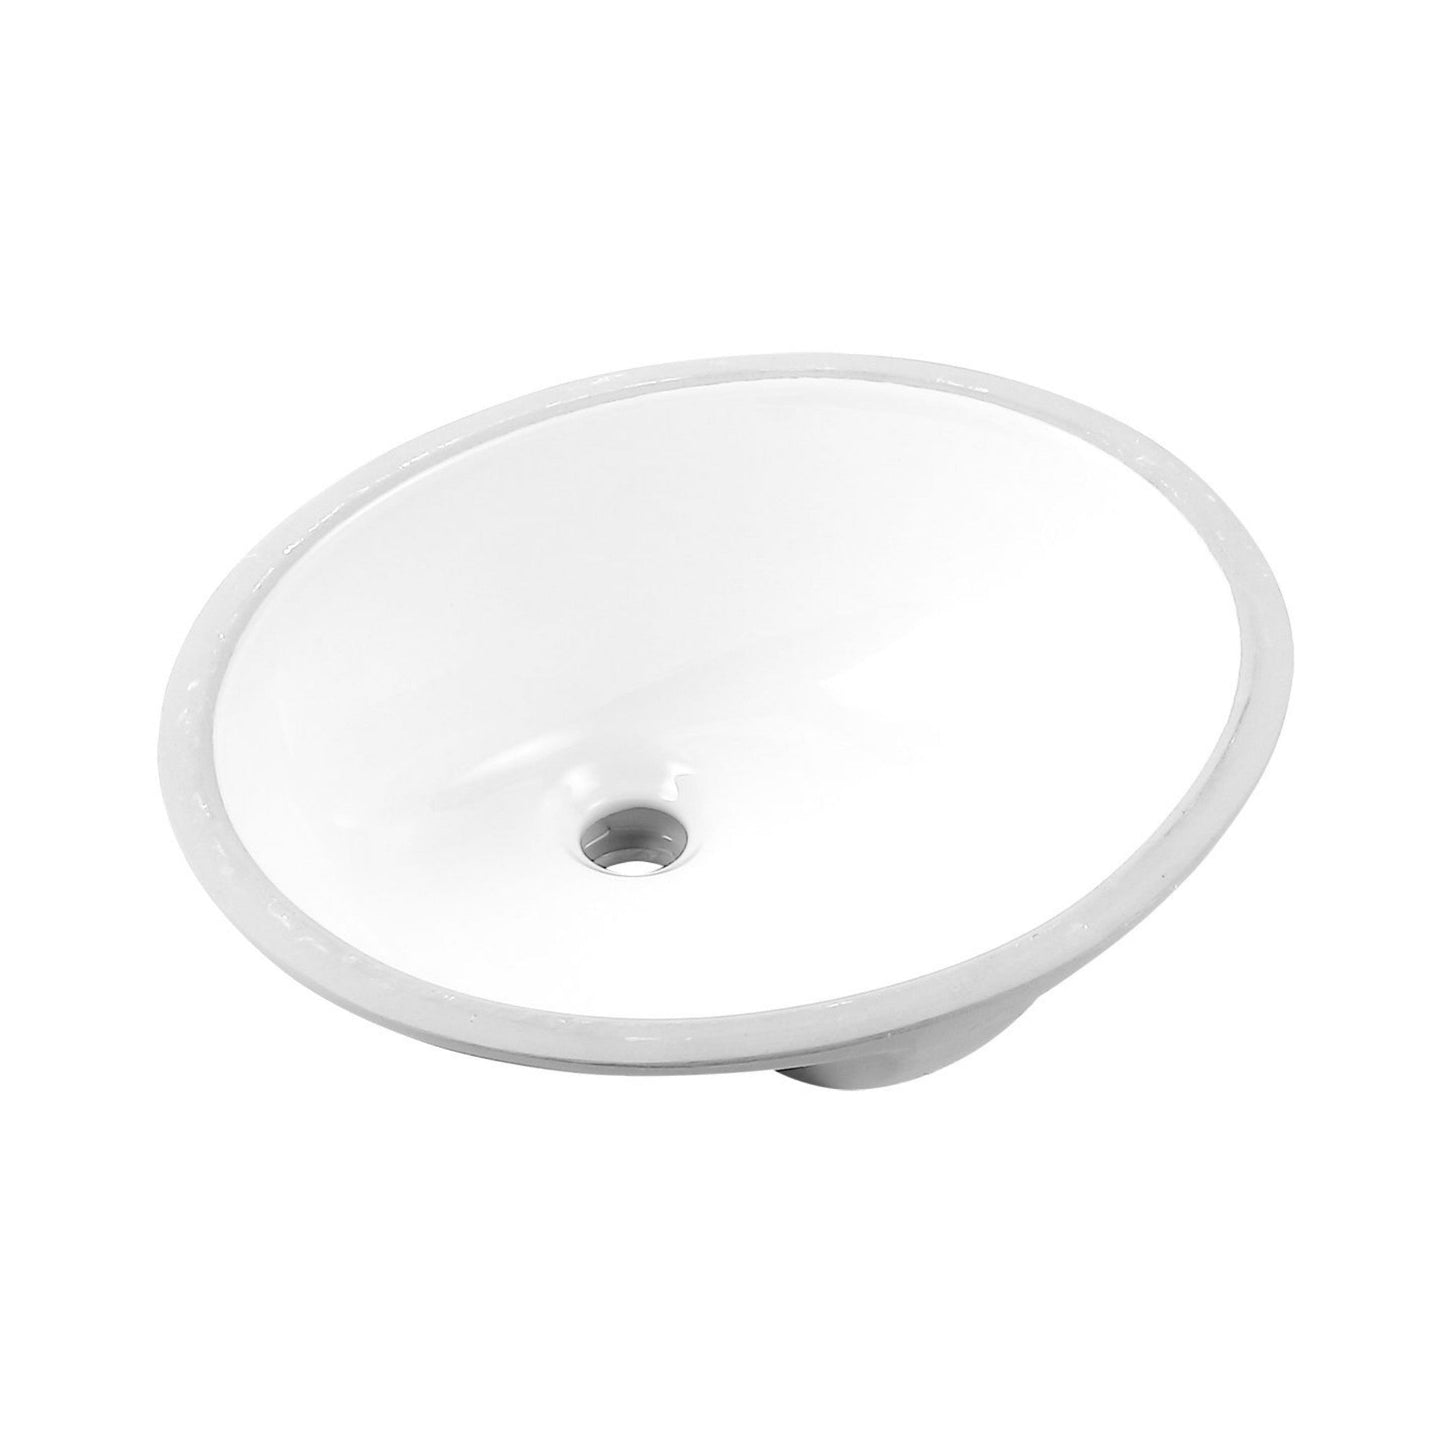 Ratel 20" x 16" White Oval Undermount Bathroom Sink